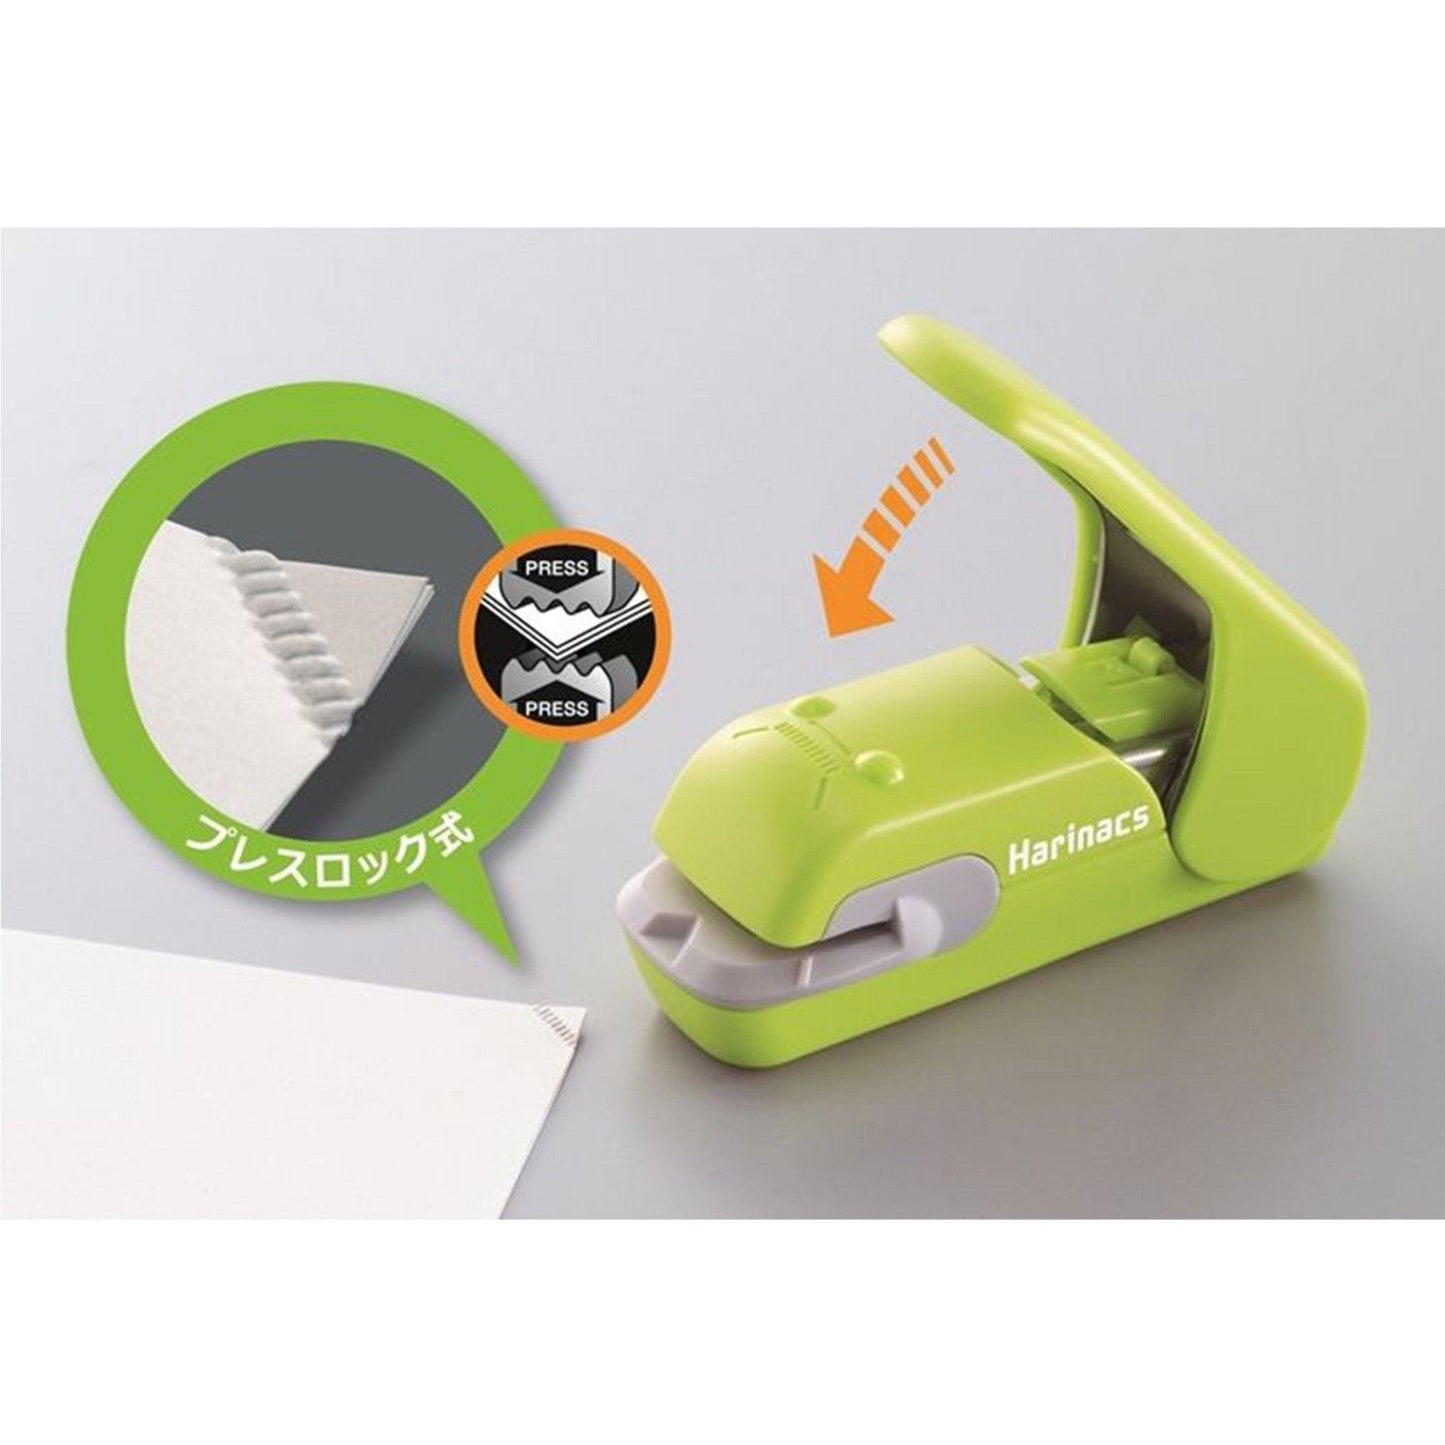 KOKUYO SLN-MPH105 needleless stapler Harinacs environmental protection embossed type 4 colors - CHL-STORE 